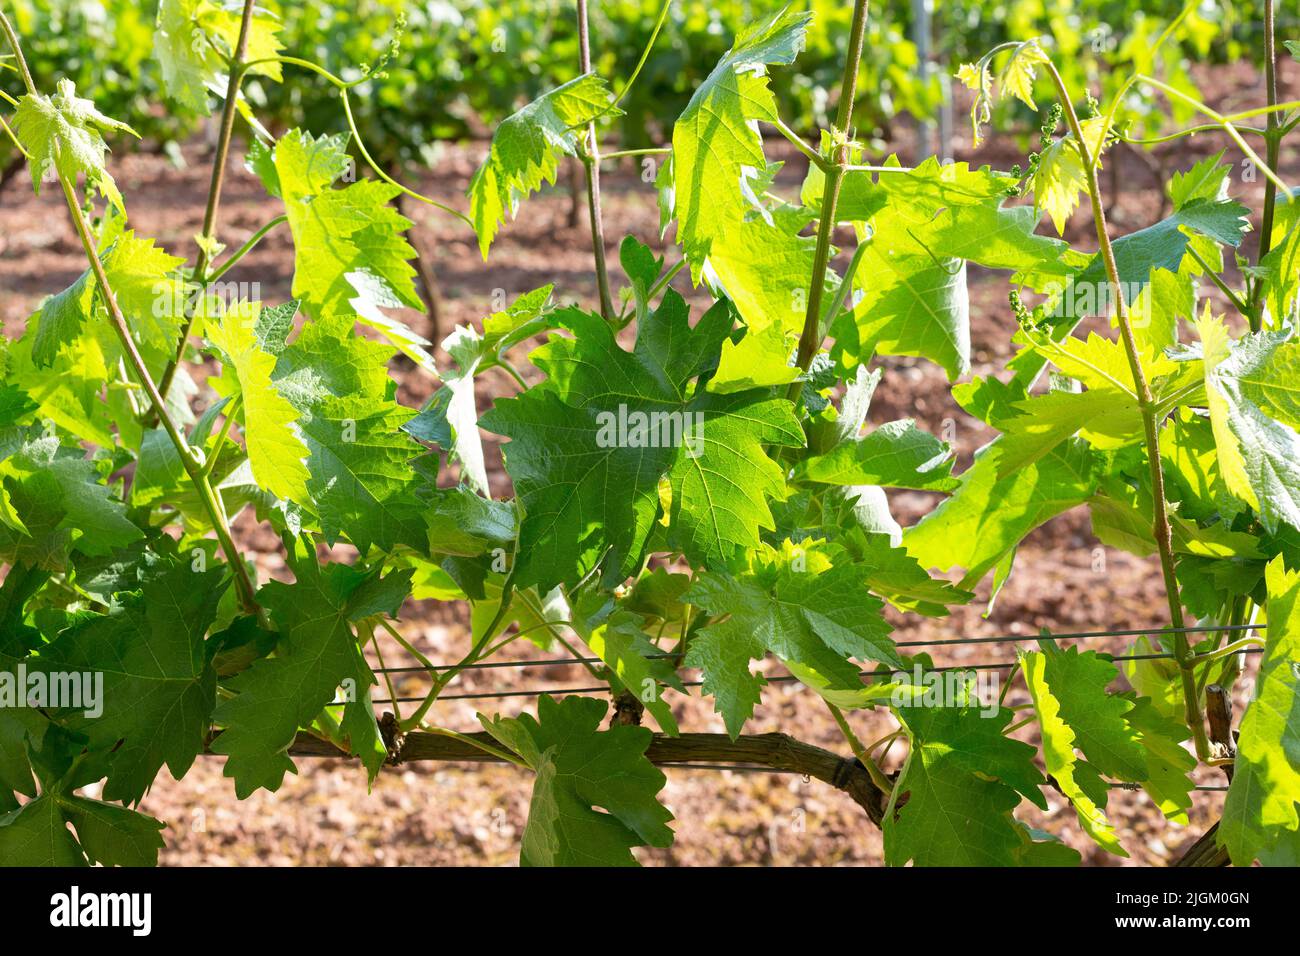 Vineyards in spring before harvest in the Rioja area, Spain. Stock Photo